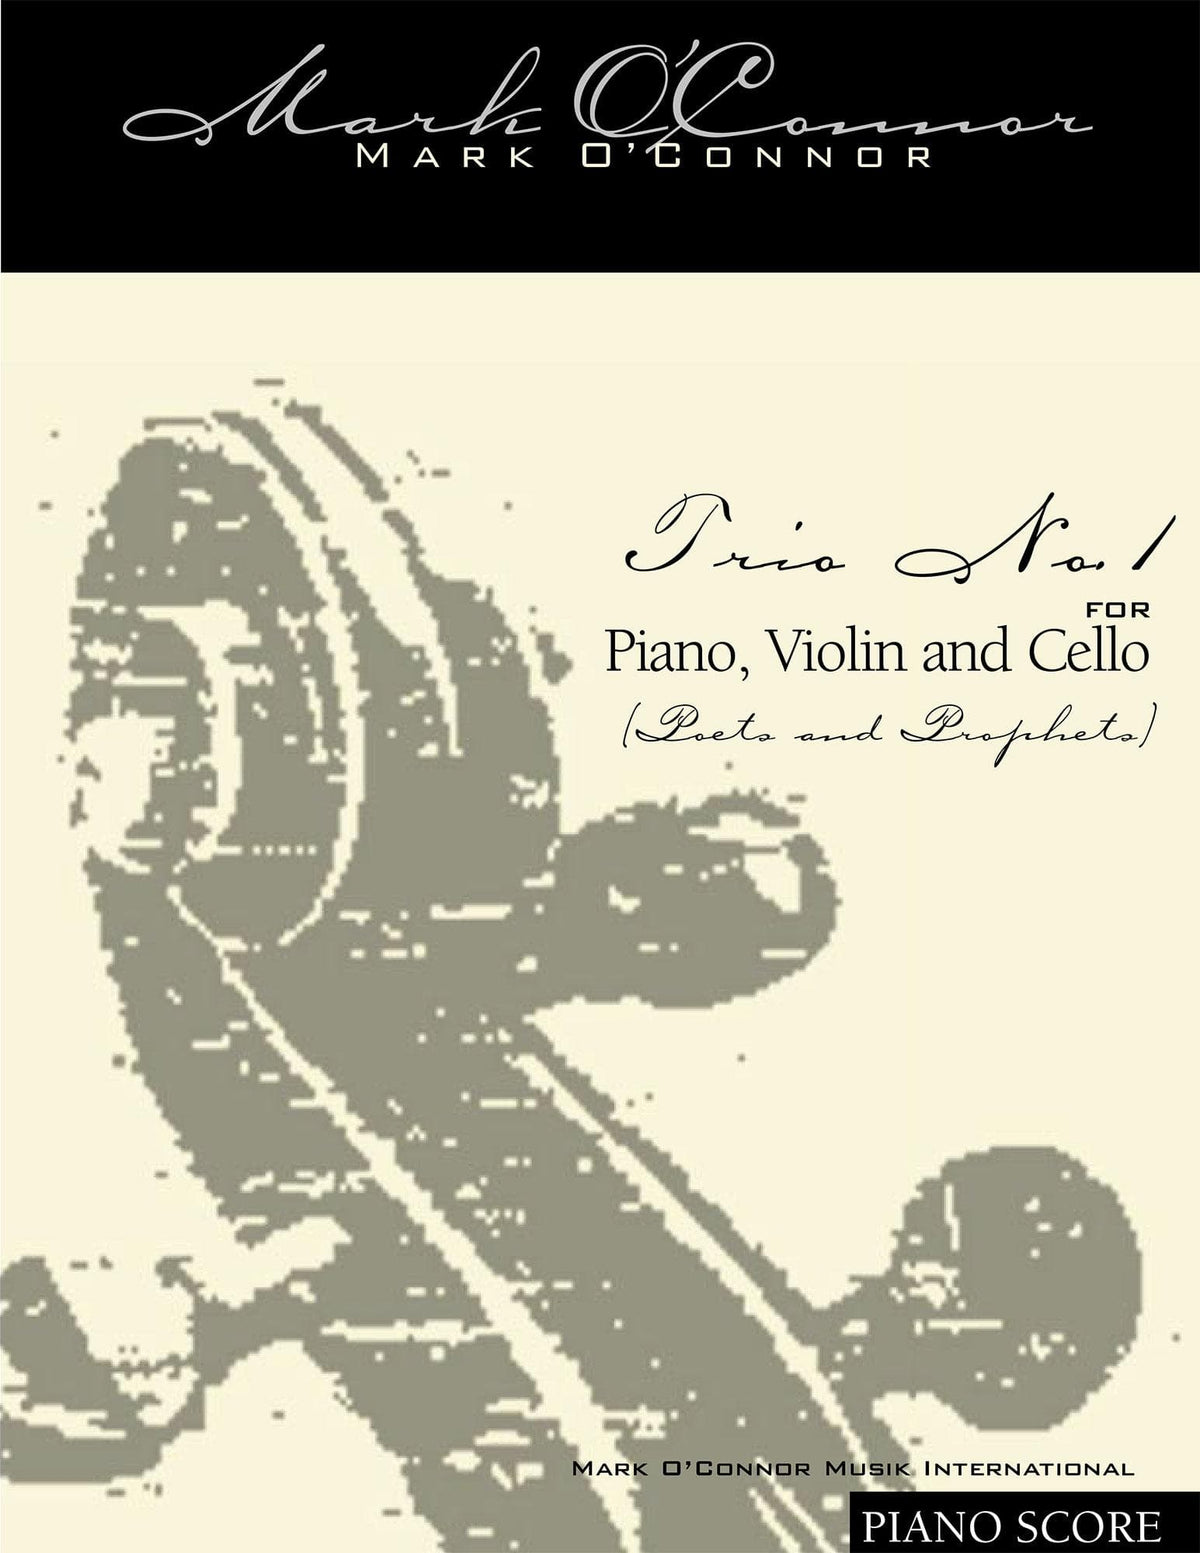 O'Connor, Mark - Trio No. 1 (Poets and Prophets) for Piano, Violin and Cello - Piano - Digital Download